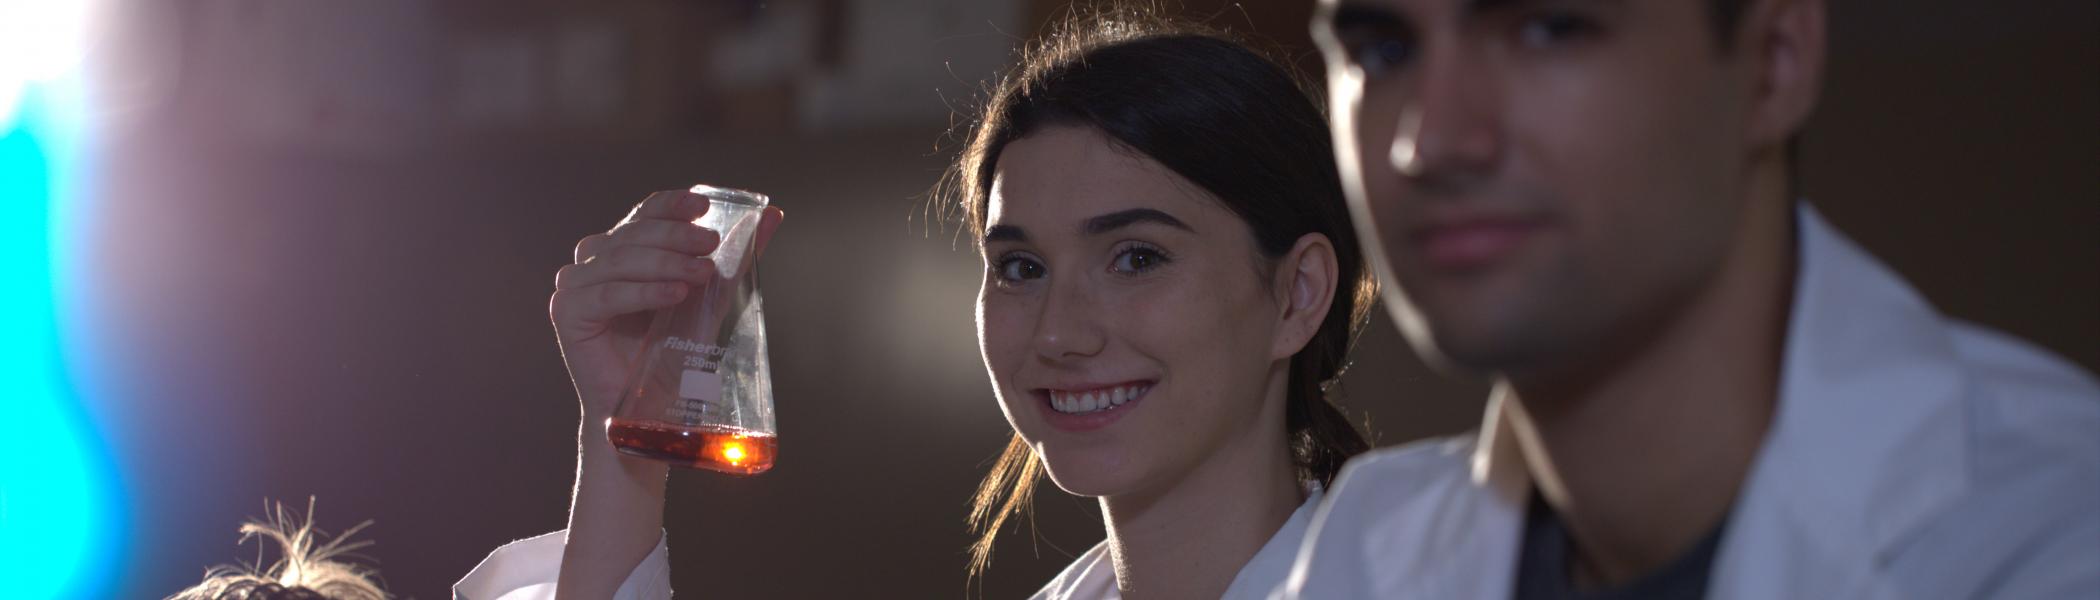 Girl holding beaker in a lab